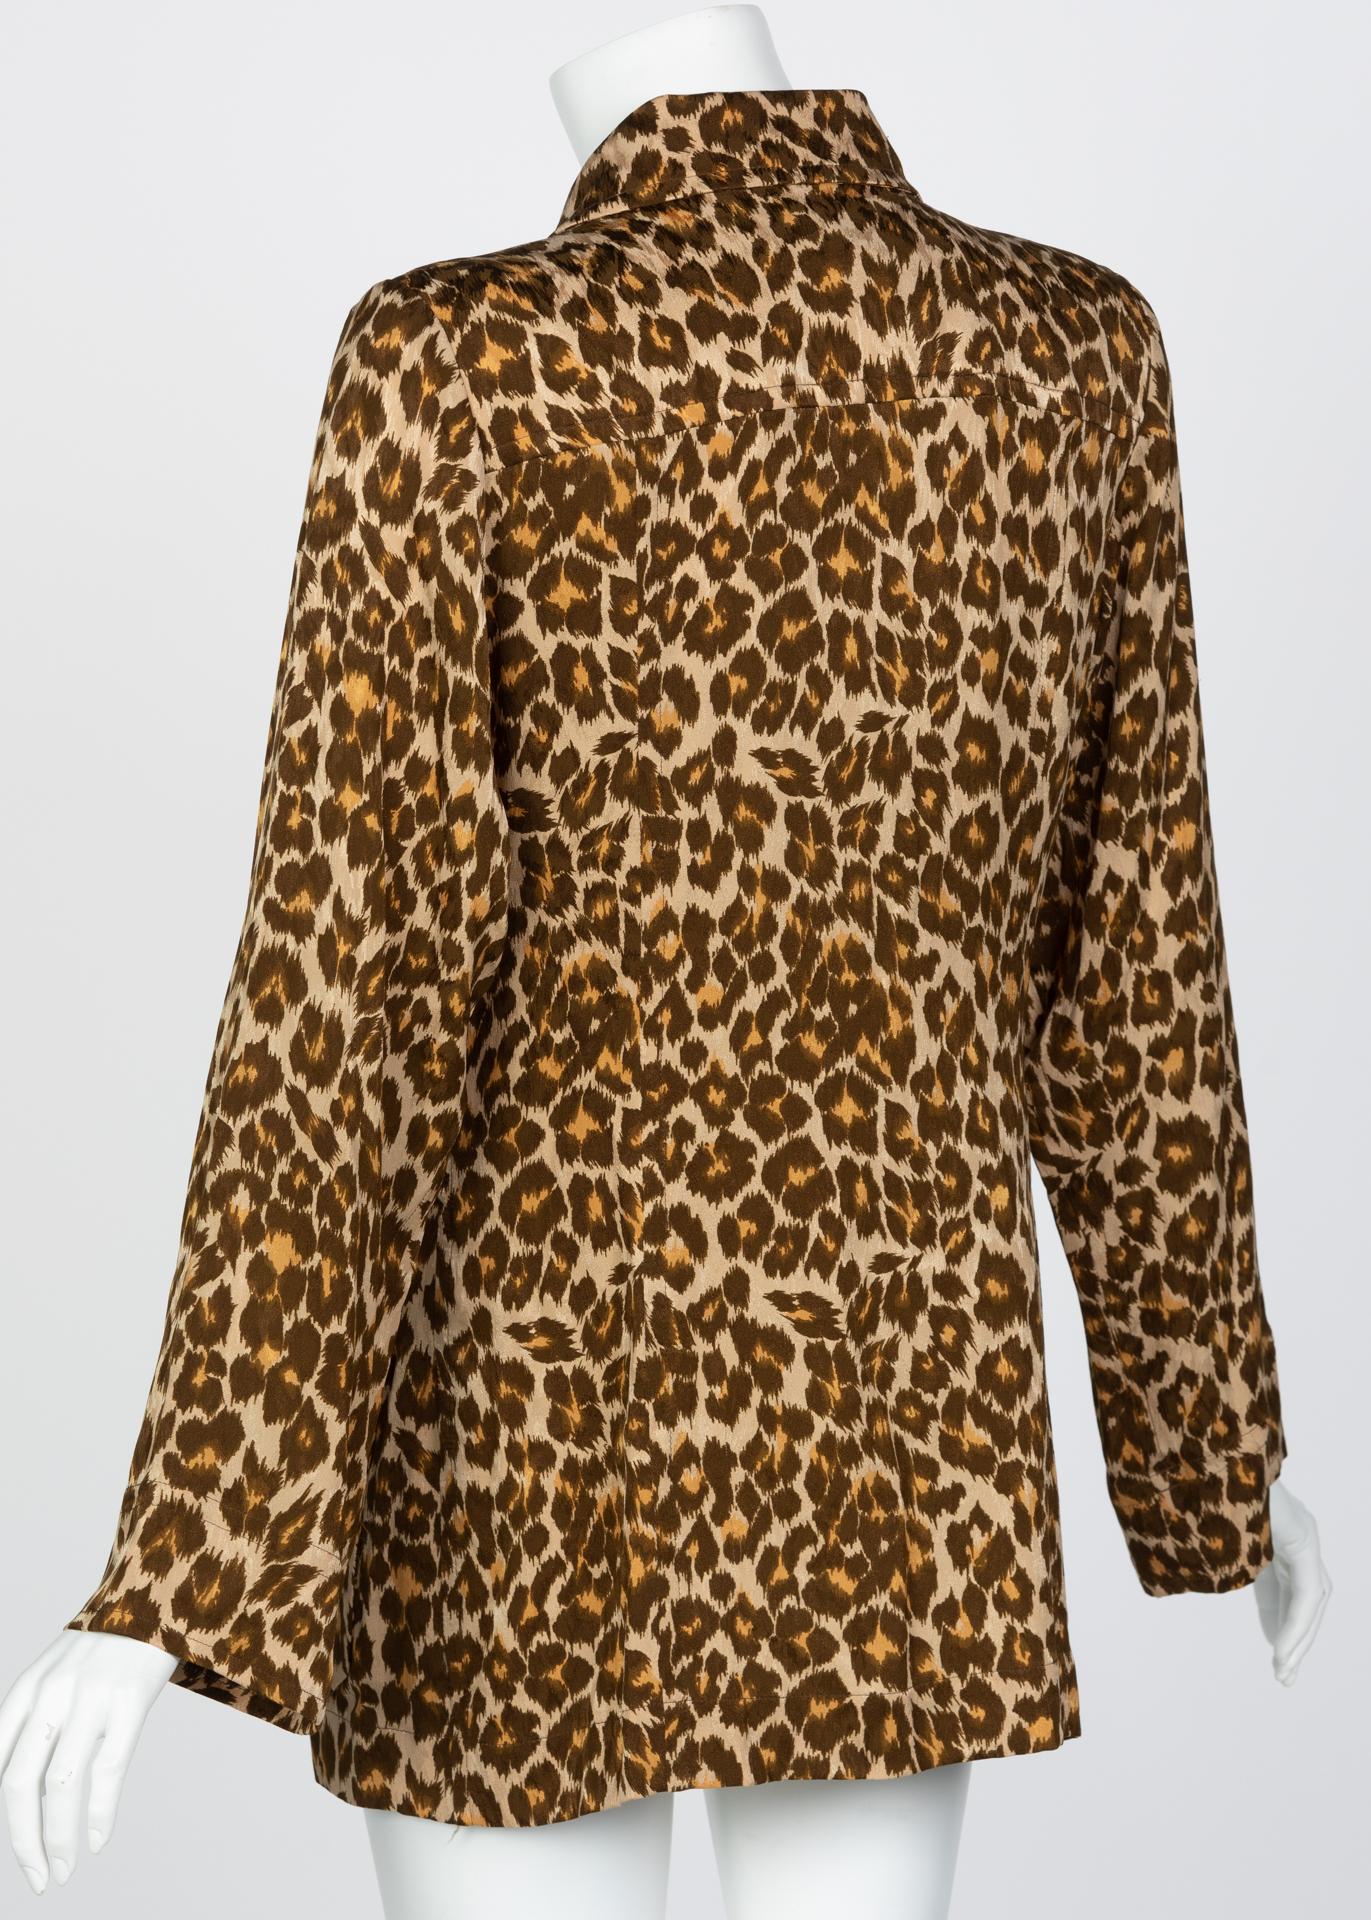 Yves Saint Laurent Leopard Silk Safari Top In Excellent Condition For Sale In Boca Raton, FL